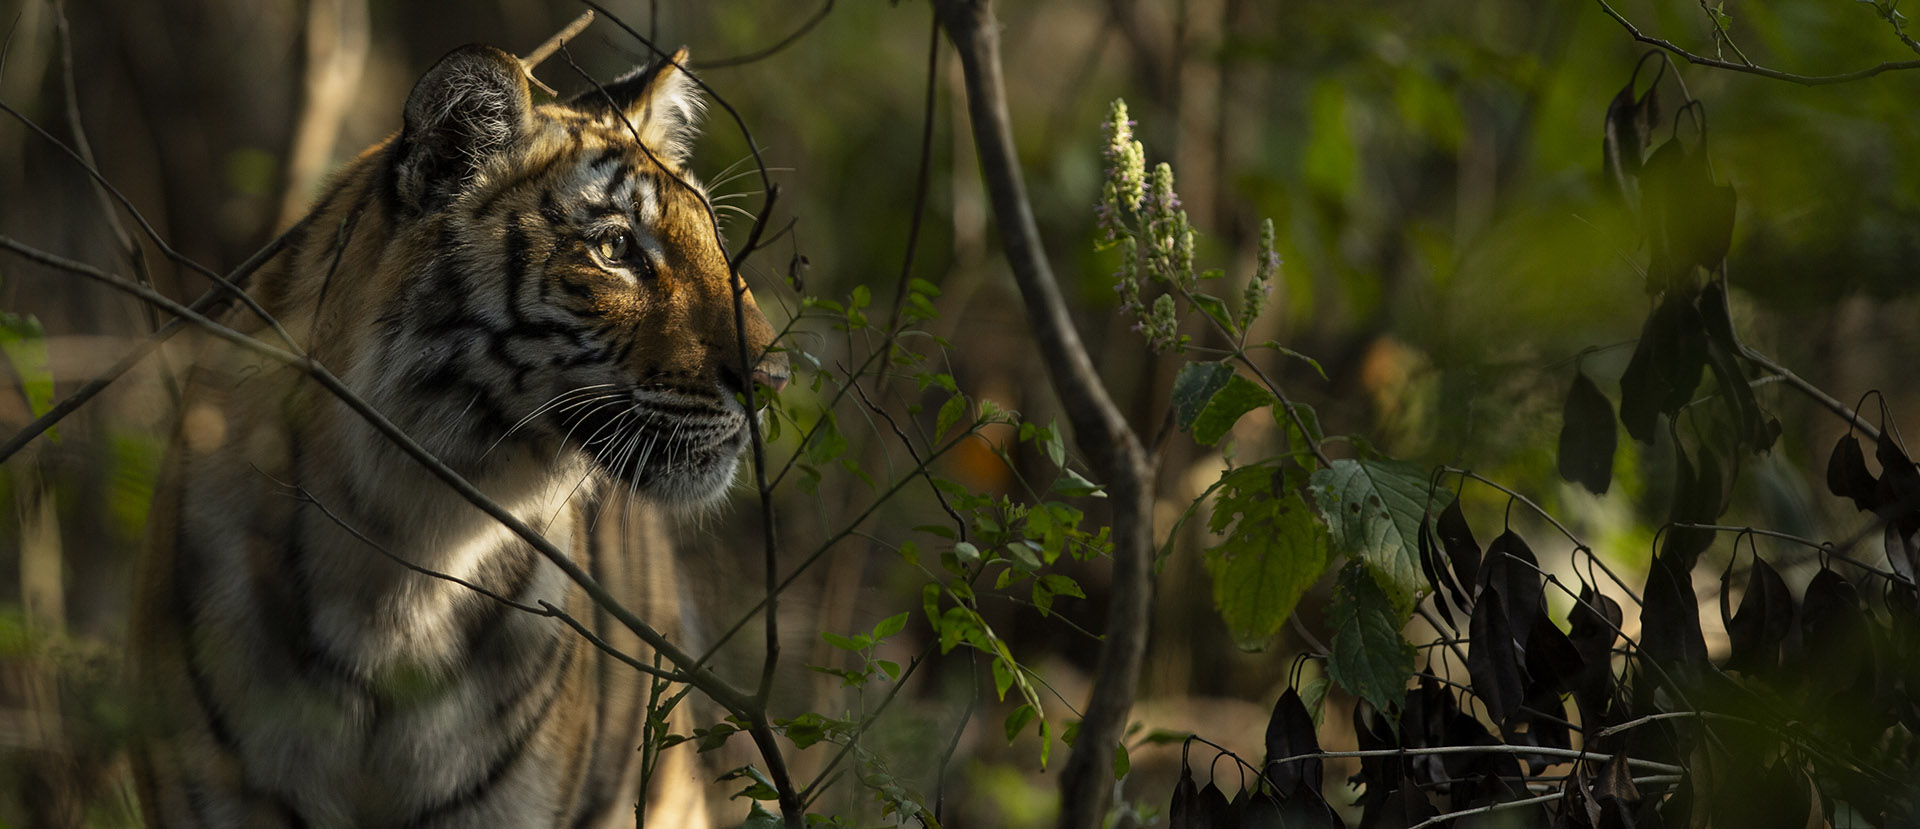 tiger safari india blog banner